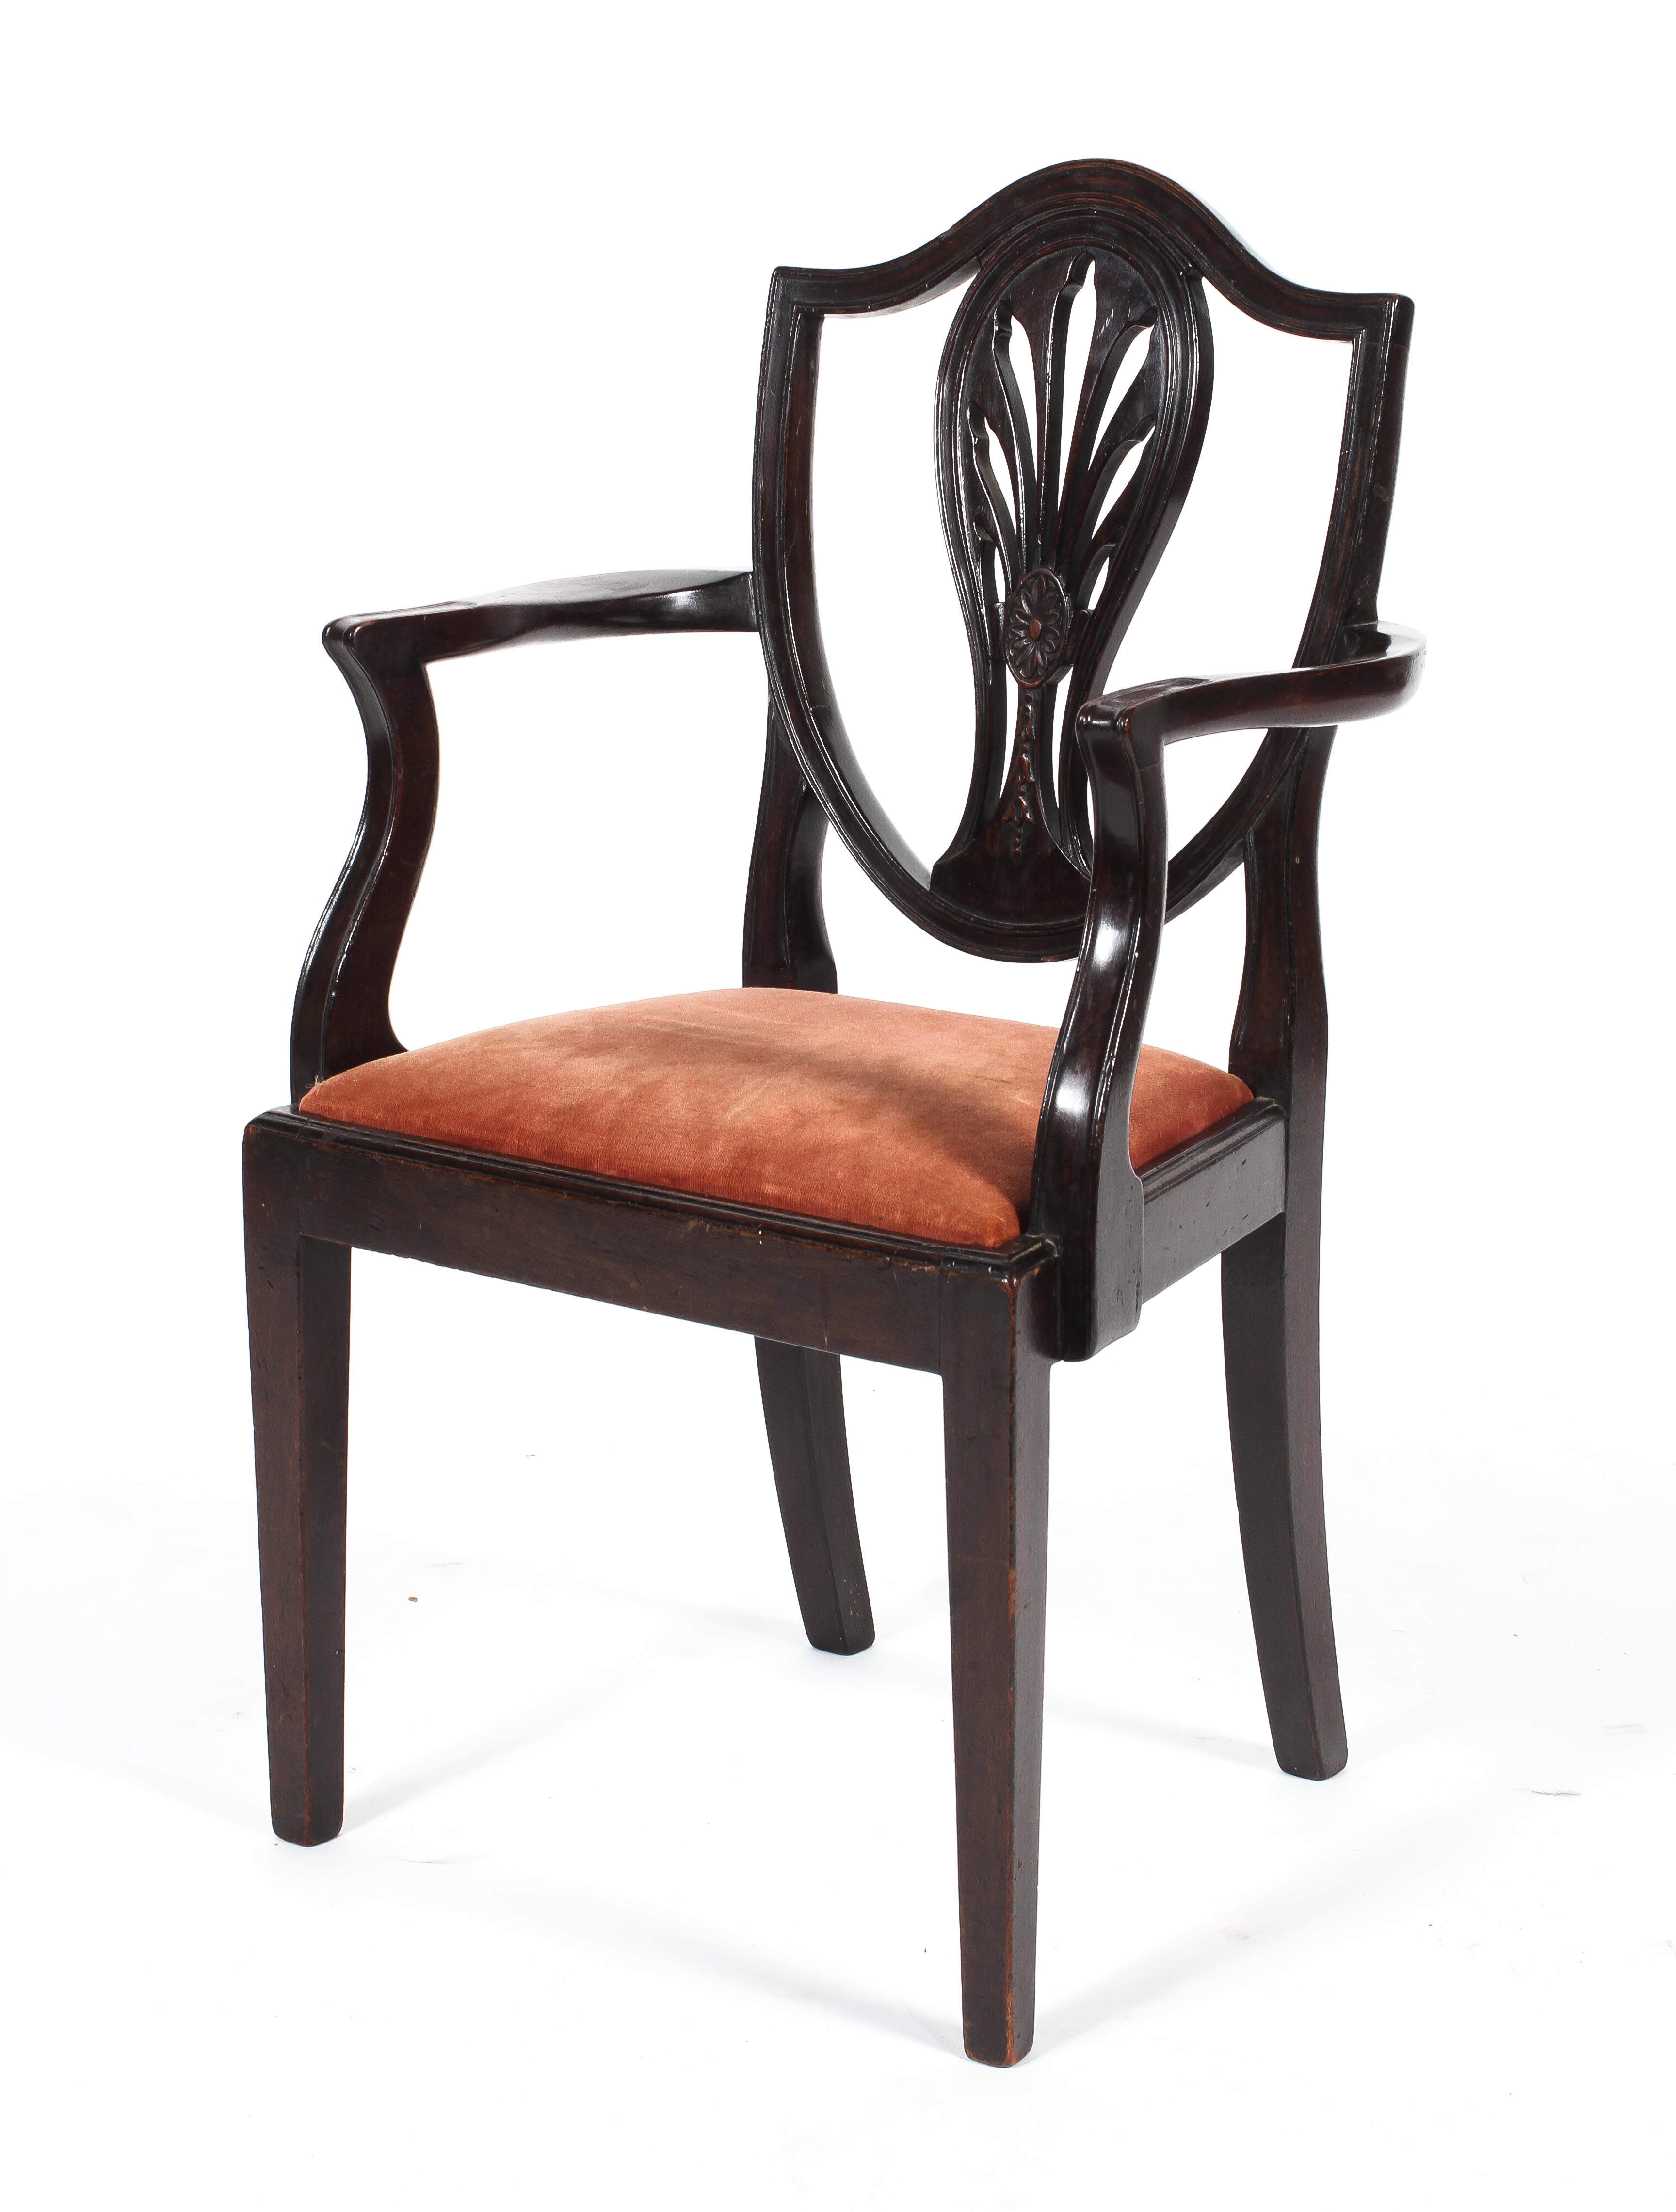 A 19th century mahogany Hepplewhite shield back child's carver chair.